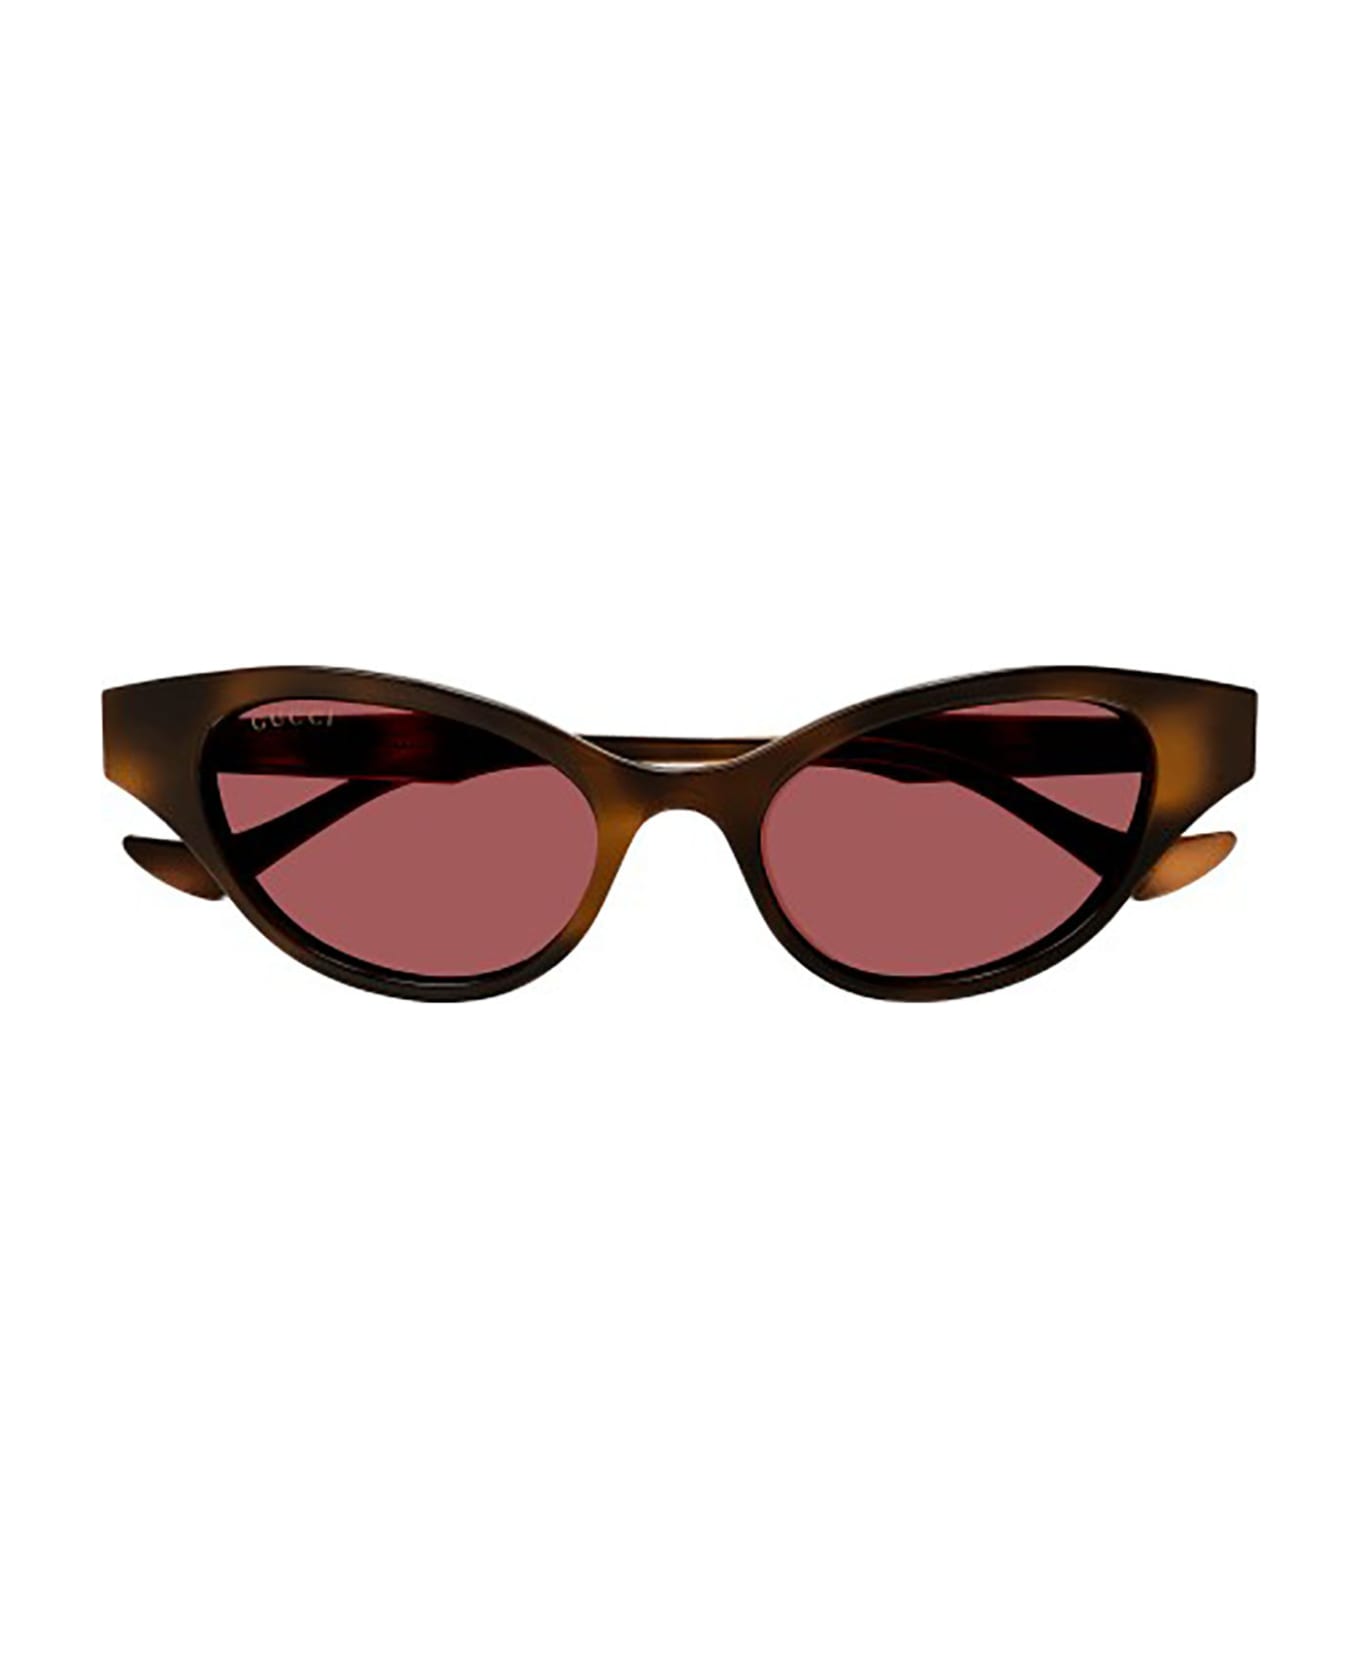 Gucci Eyewear GG1298S Sunglasses - Havana Havana Brown サングラス